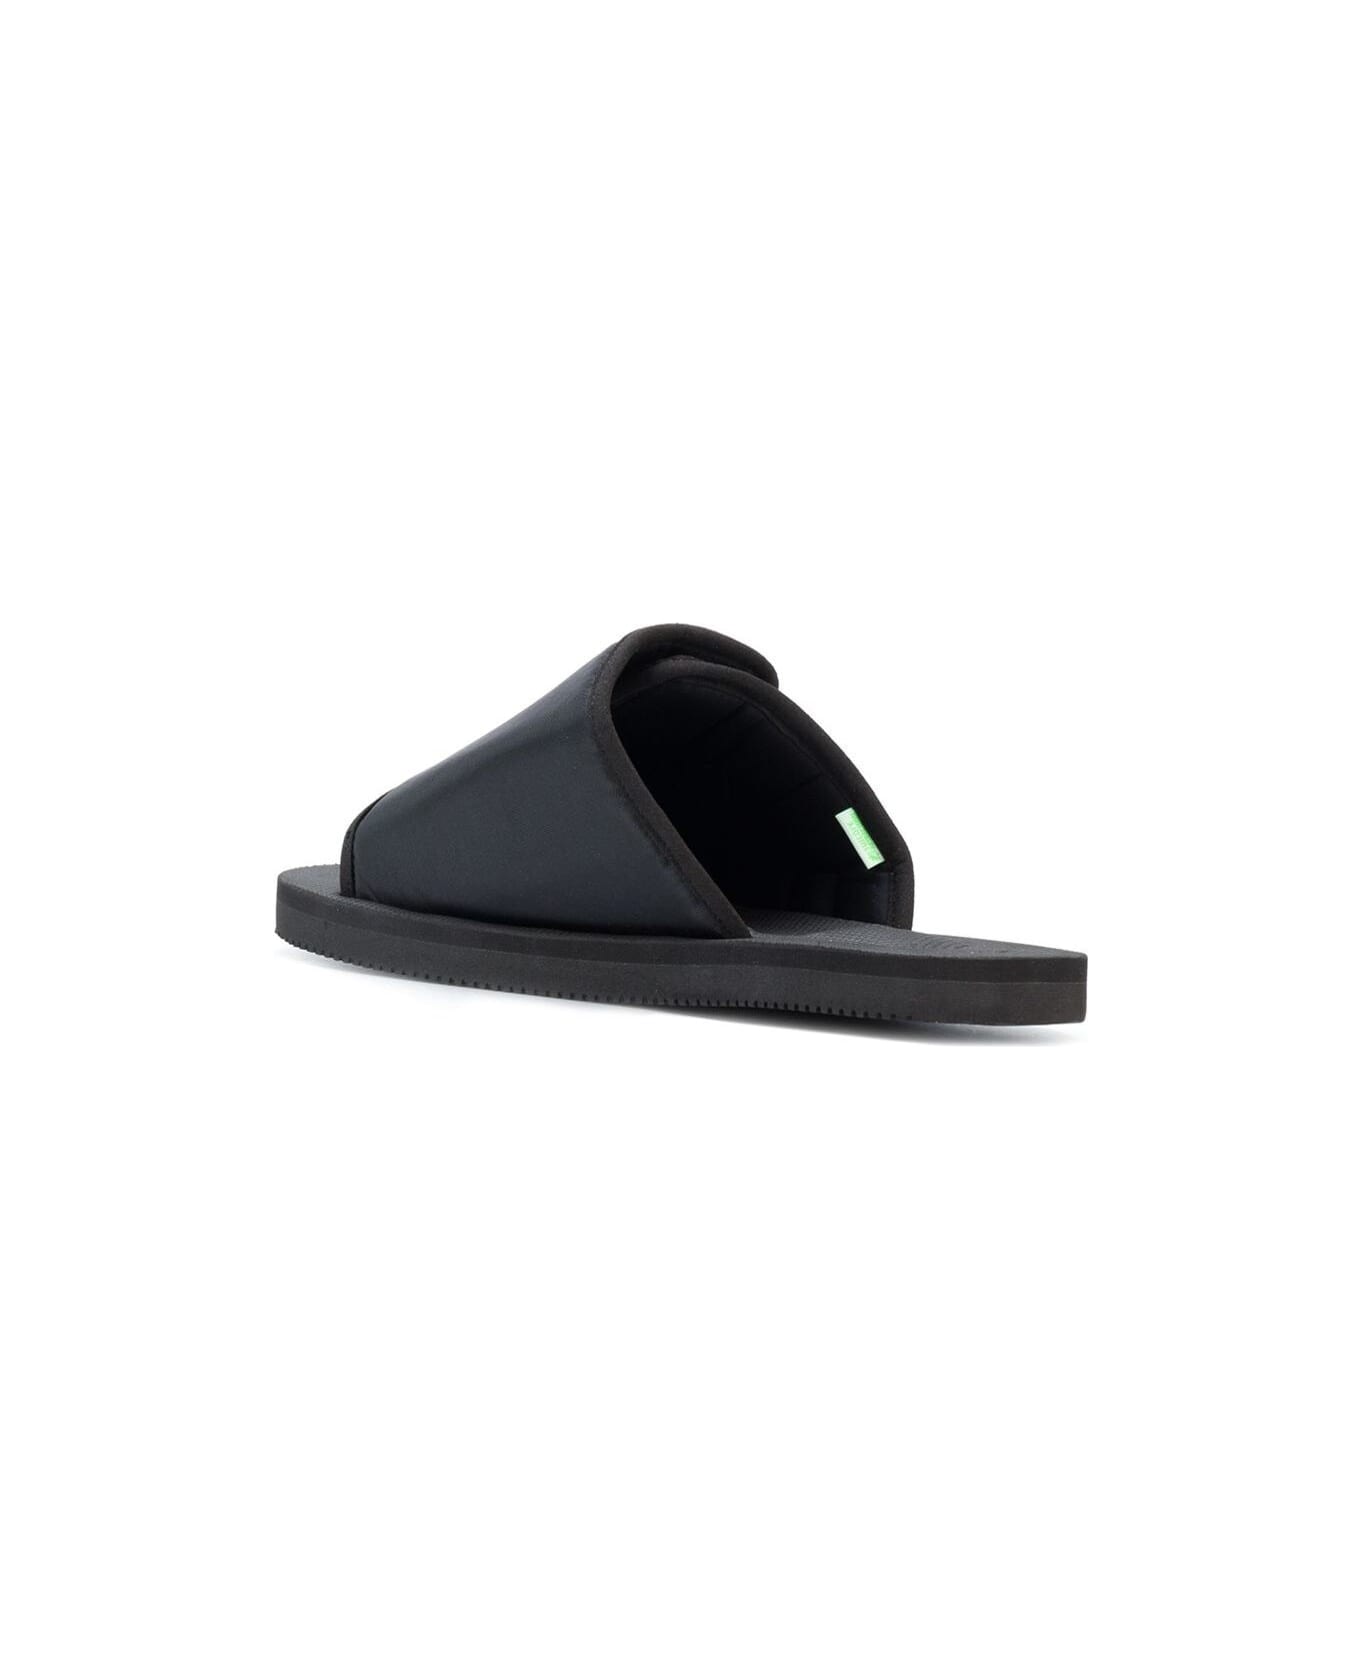 SUICOKE 'kaw-cab' Black Sandals With Velcro Fastening In Nylon Woman Suicoke - Black サンダル